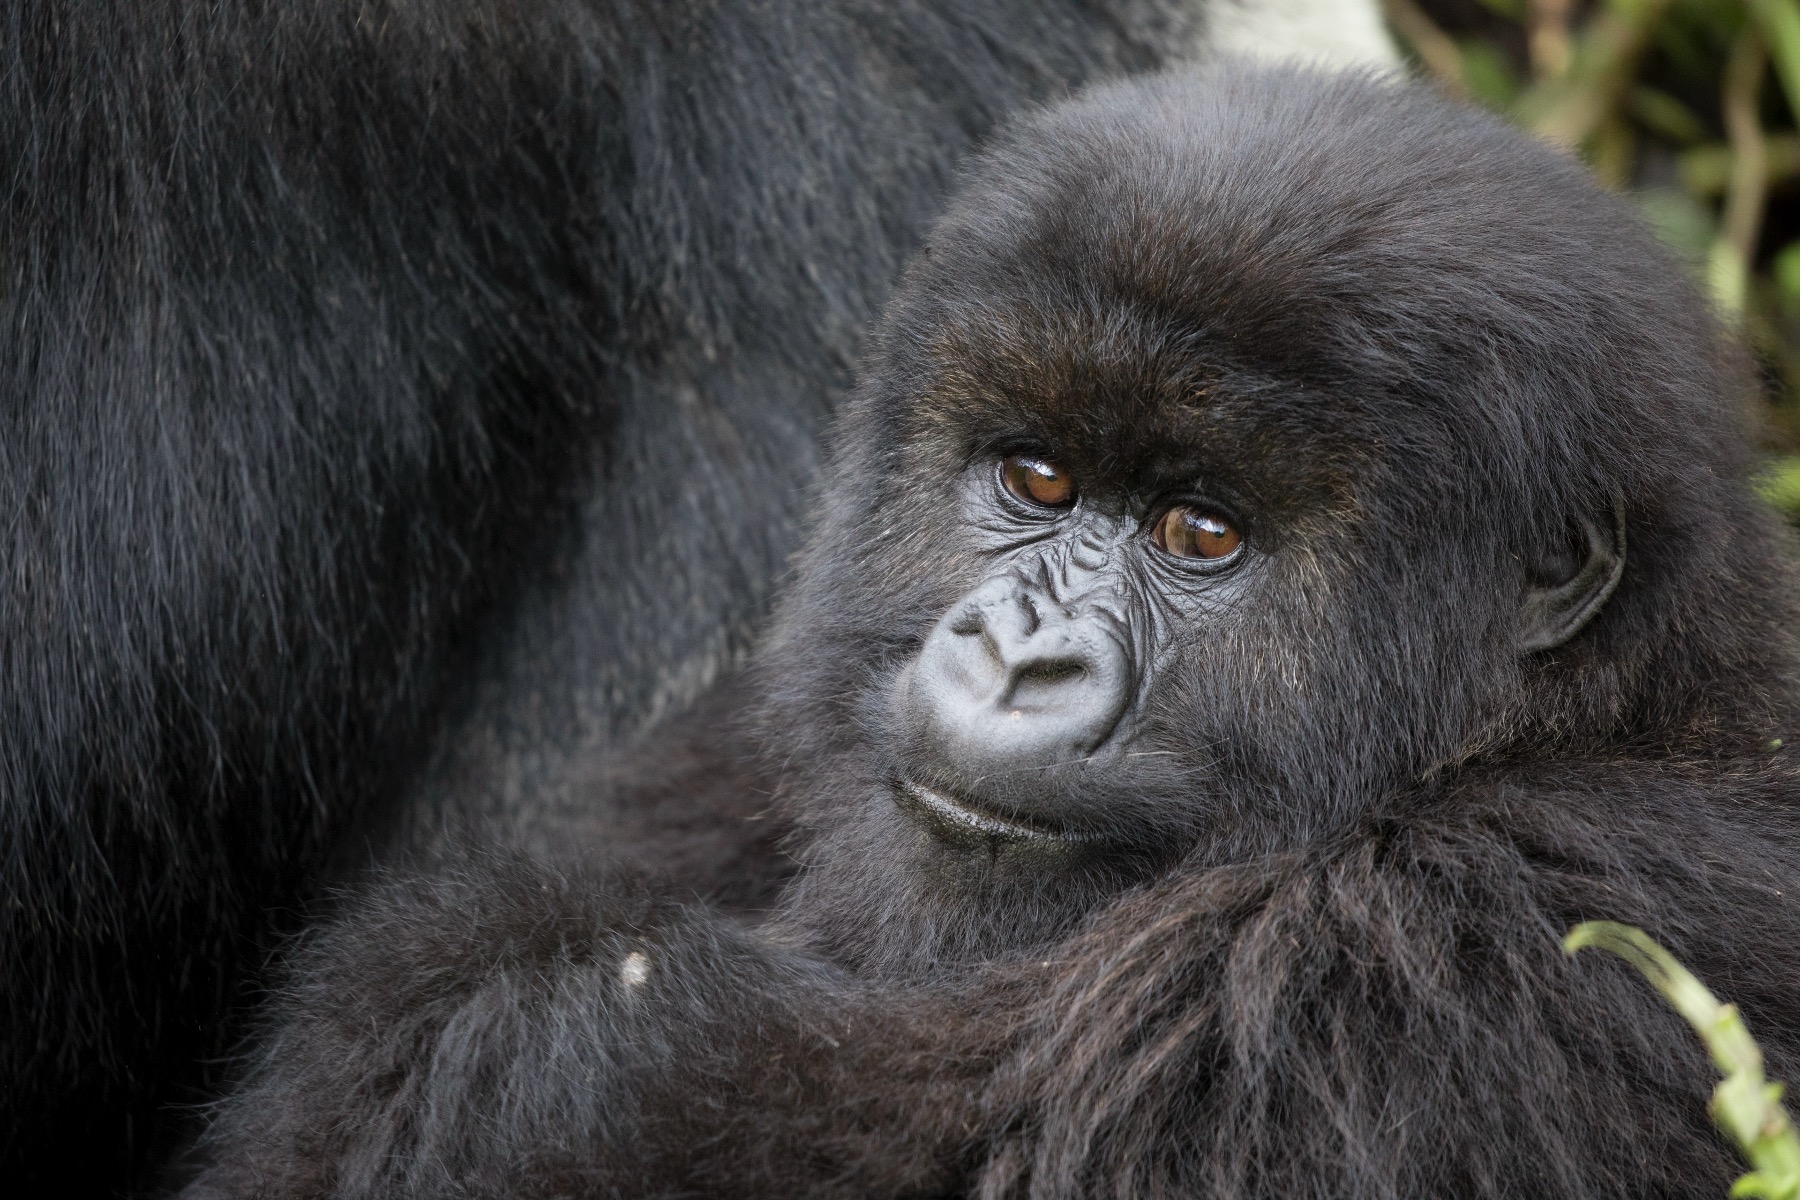 a close up of a young gorilla